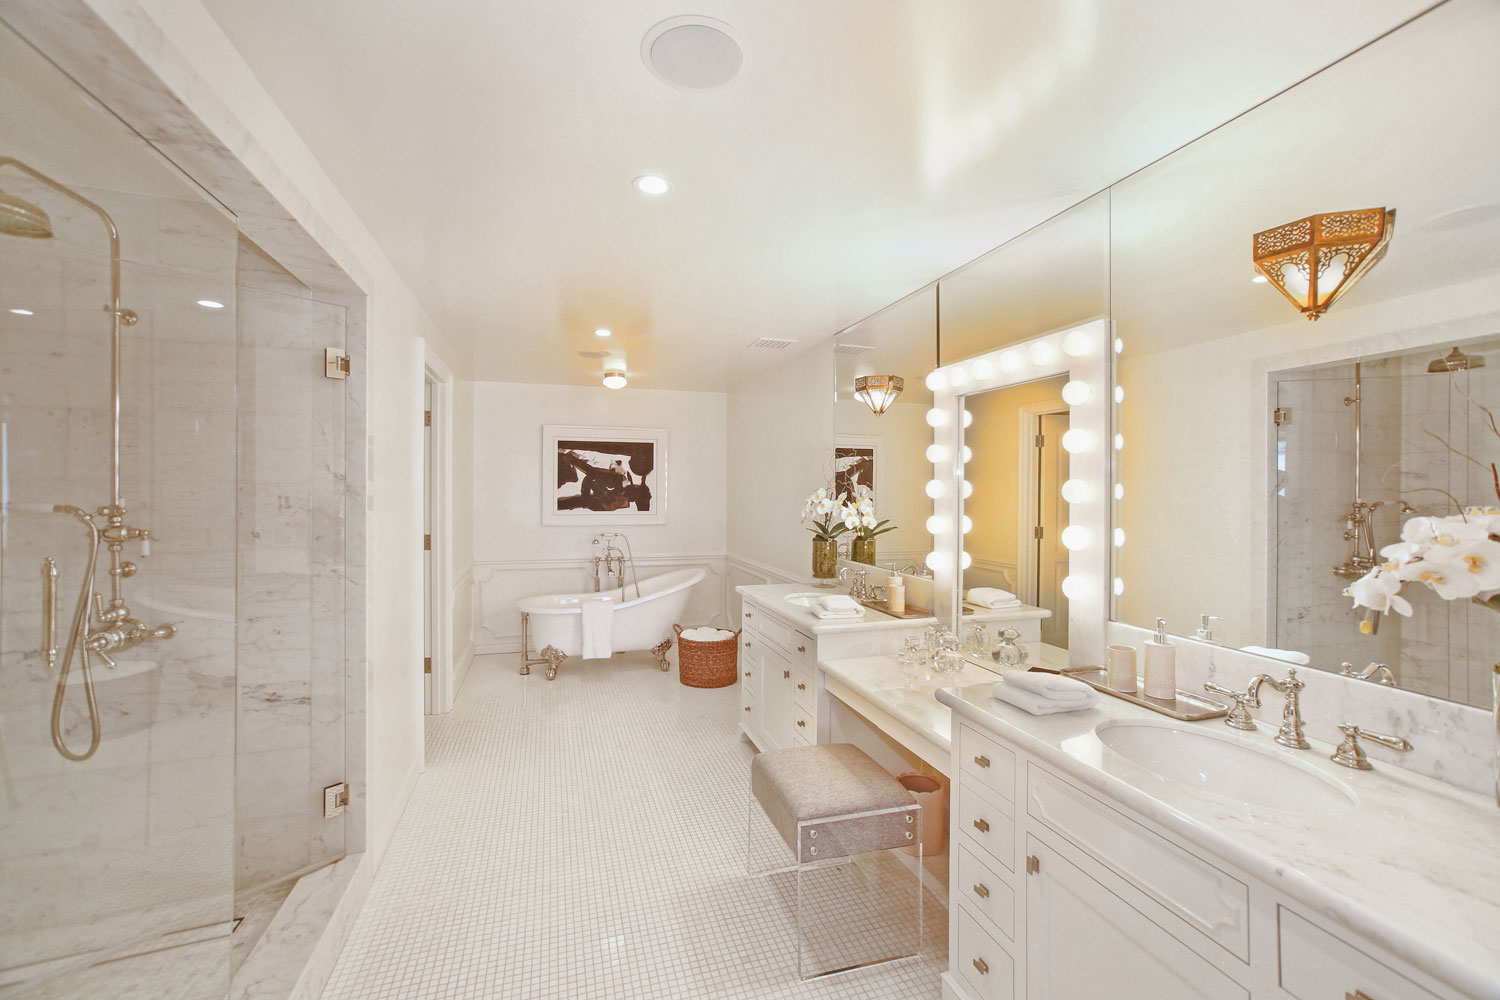 12-retro-bathroom-freestanding-tub-vanity-nickel-fixtures-gary-drake-general-contractor.jpg